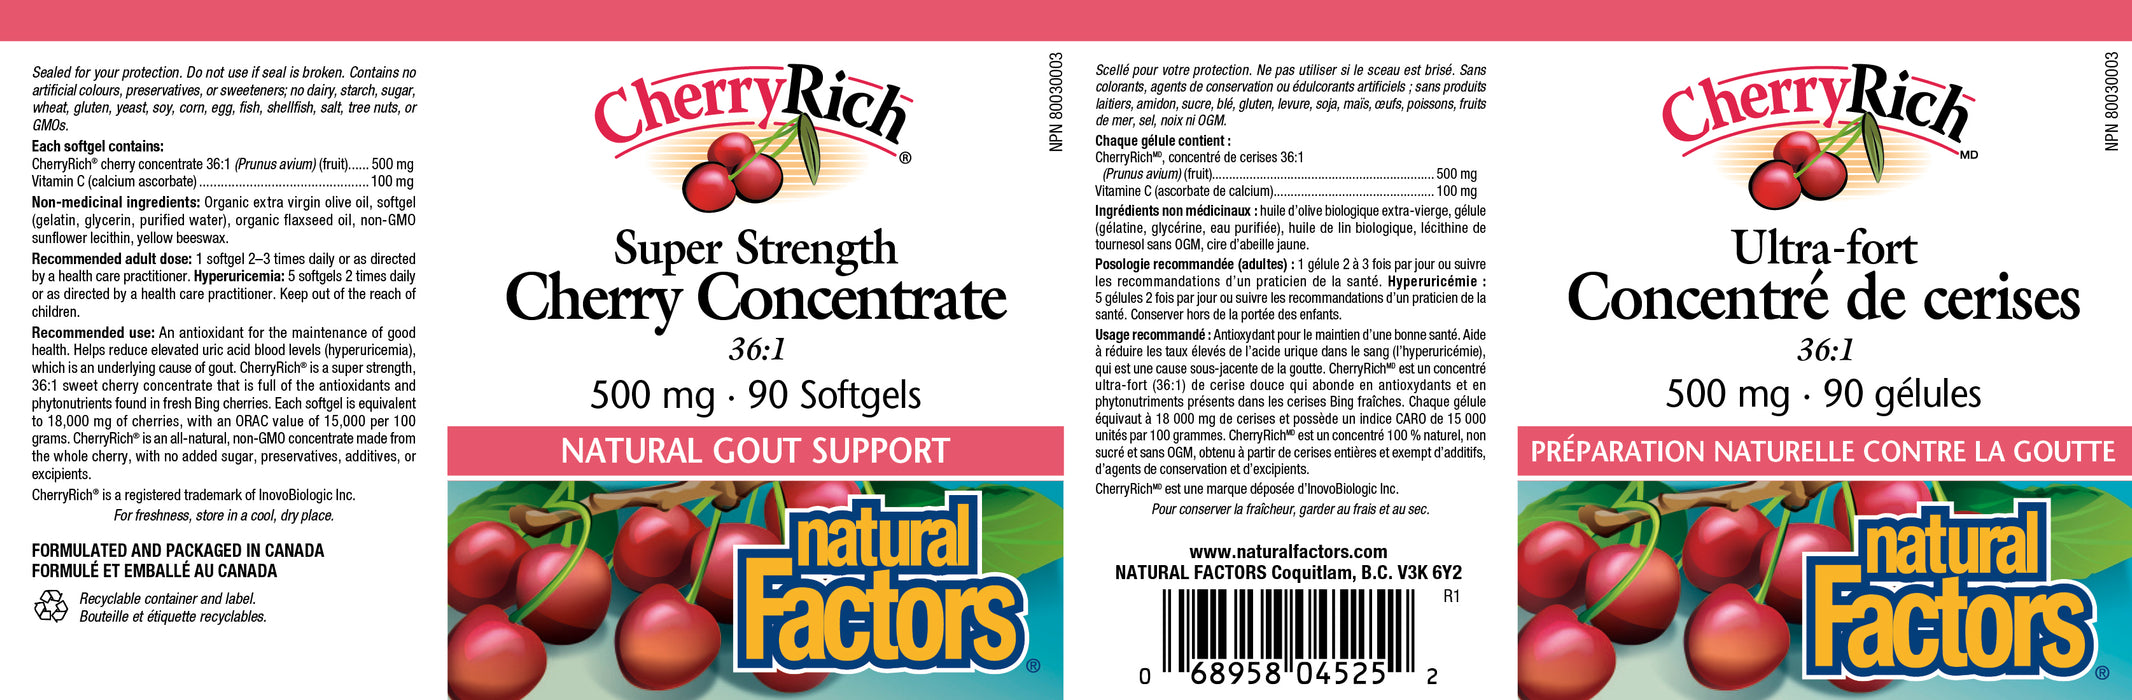 Natural Factors CherryRich Super Strength Cherry Concentrate 90 Softgels